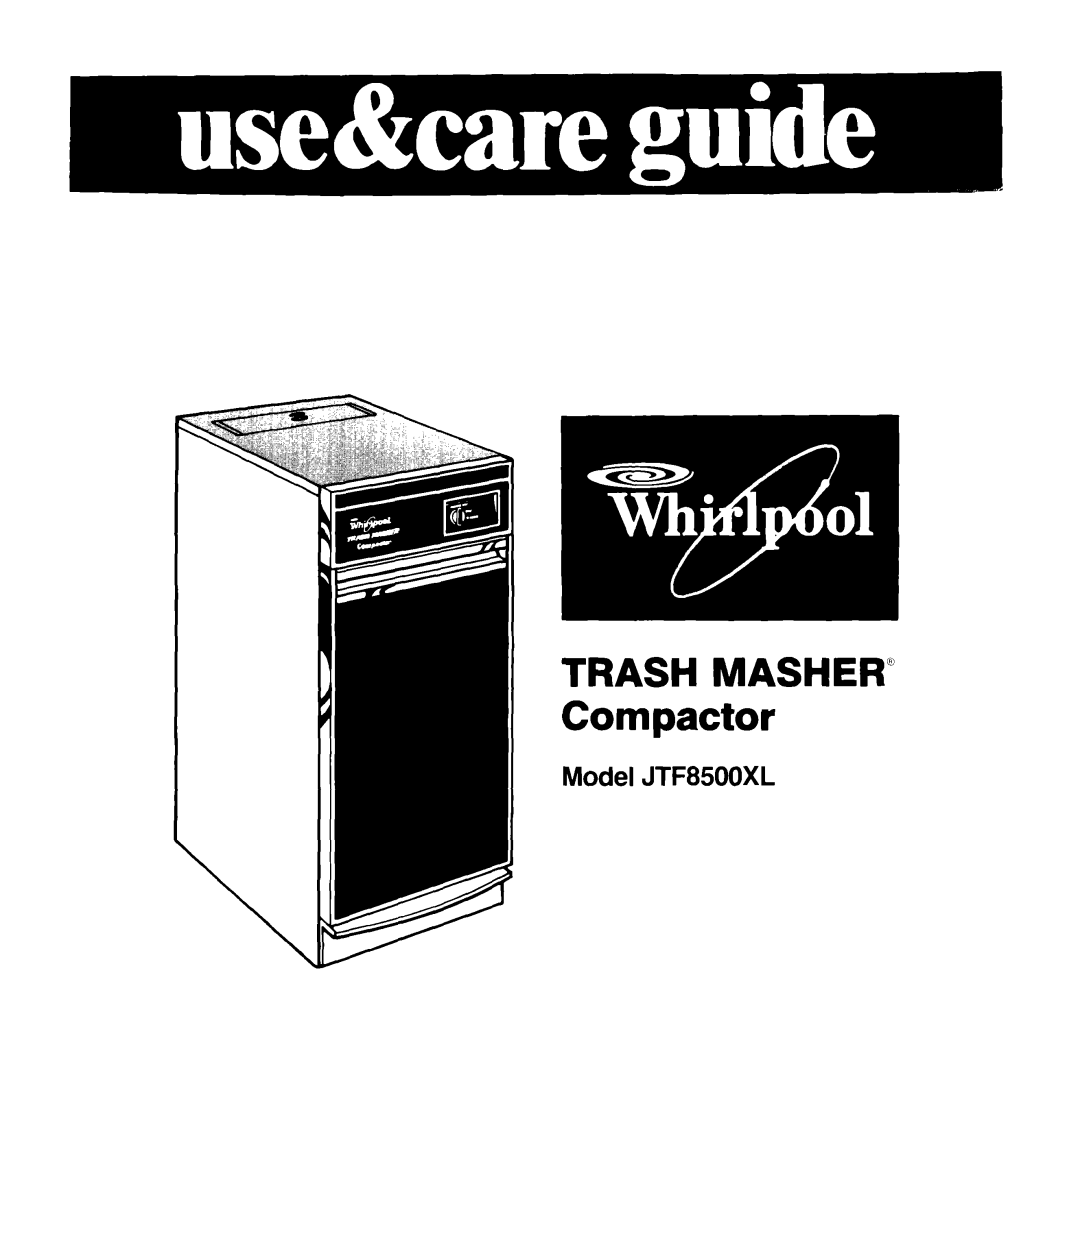 Whirlpool Trash Compactor, 403 manual c !I1, TRASH MASHER” Compactor, Model JTF8500XL 